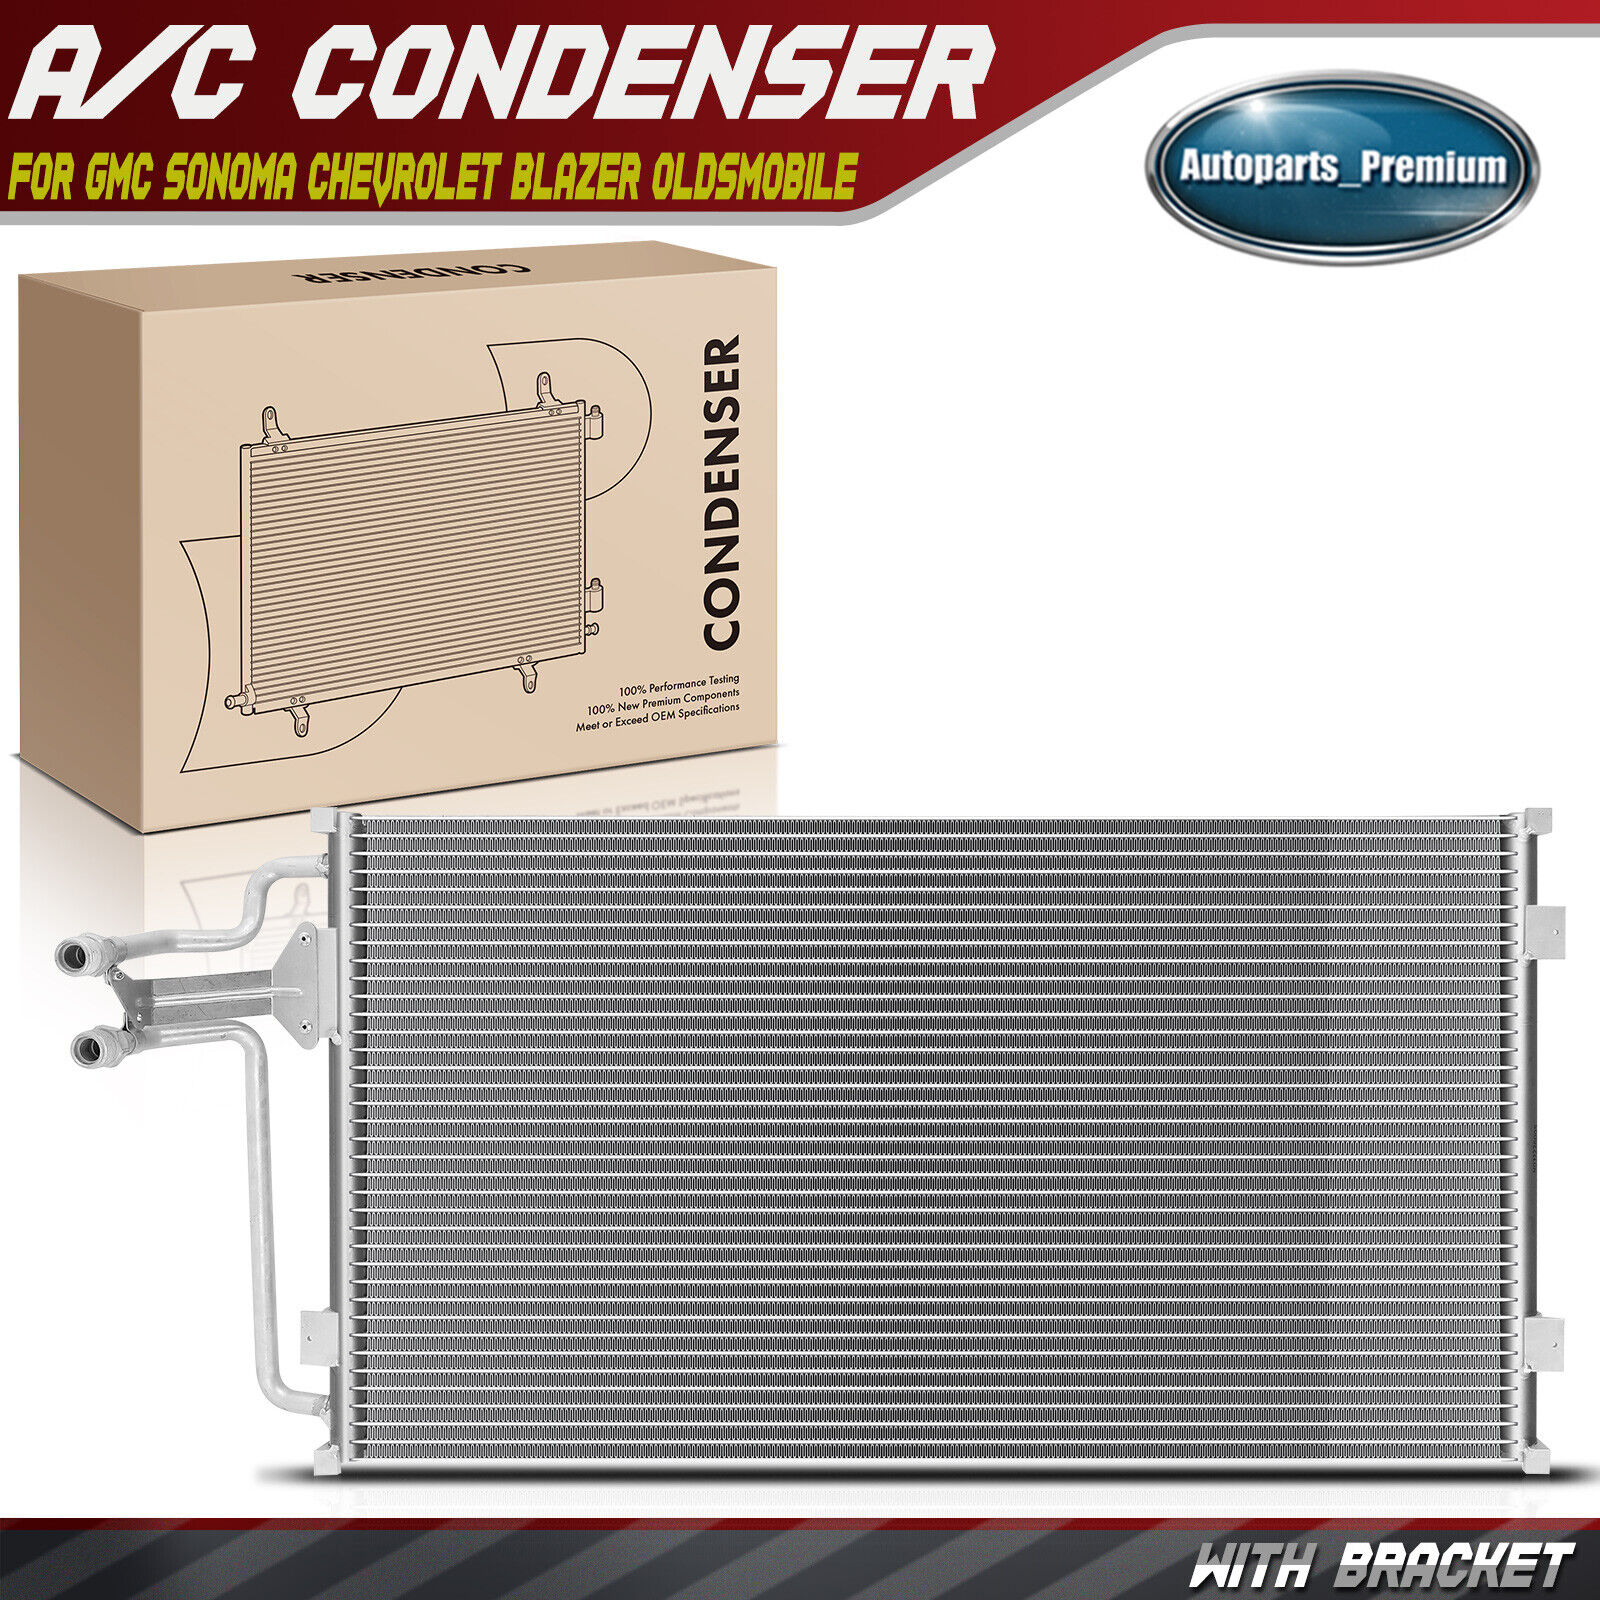 A/C Condenser with Bracket for Chevrolet Blazer 95-05 S10 GMC Jimmy Olds Bravada